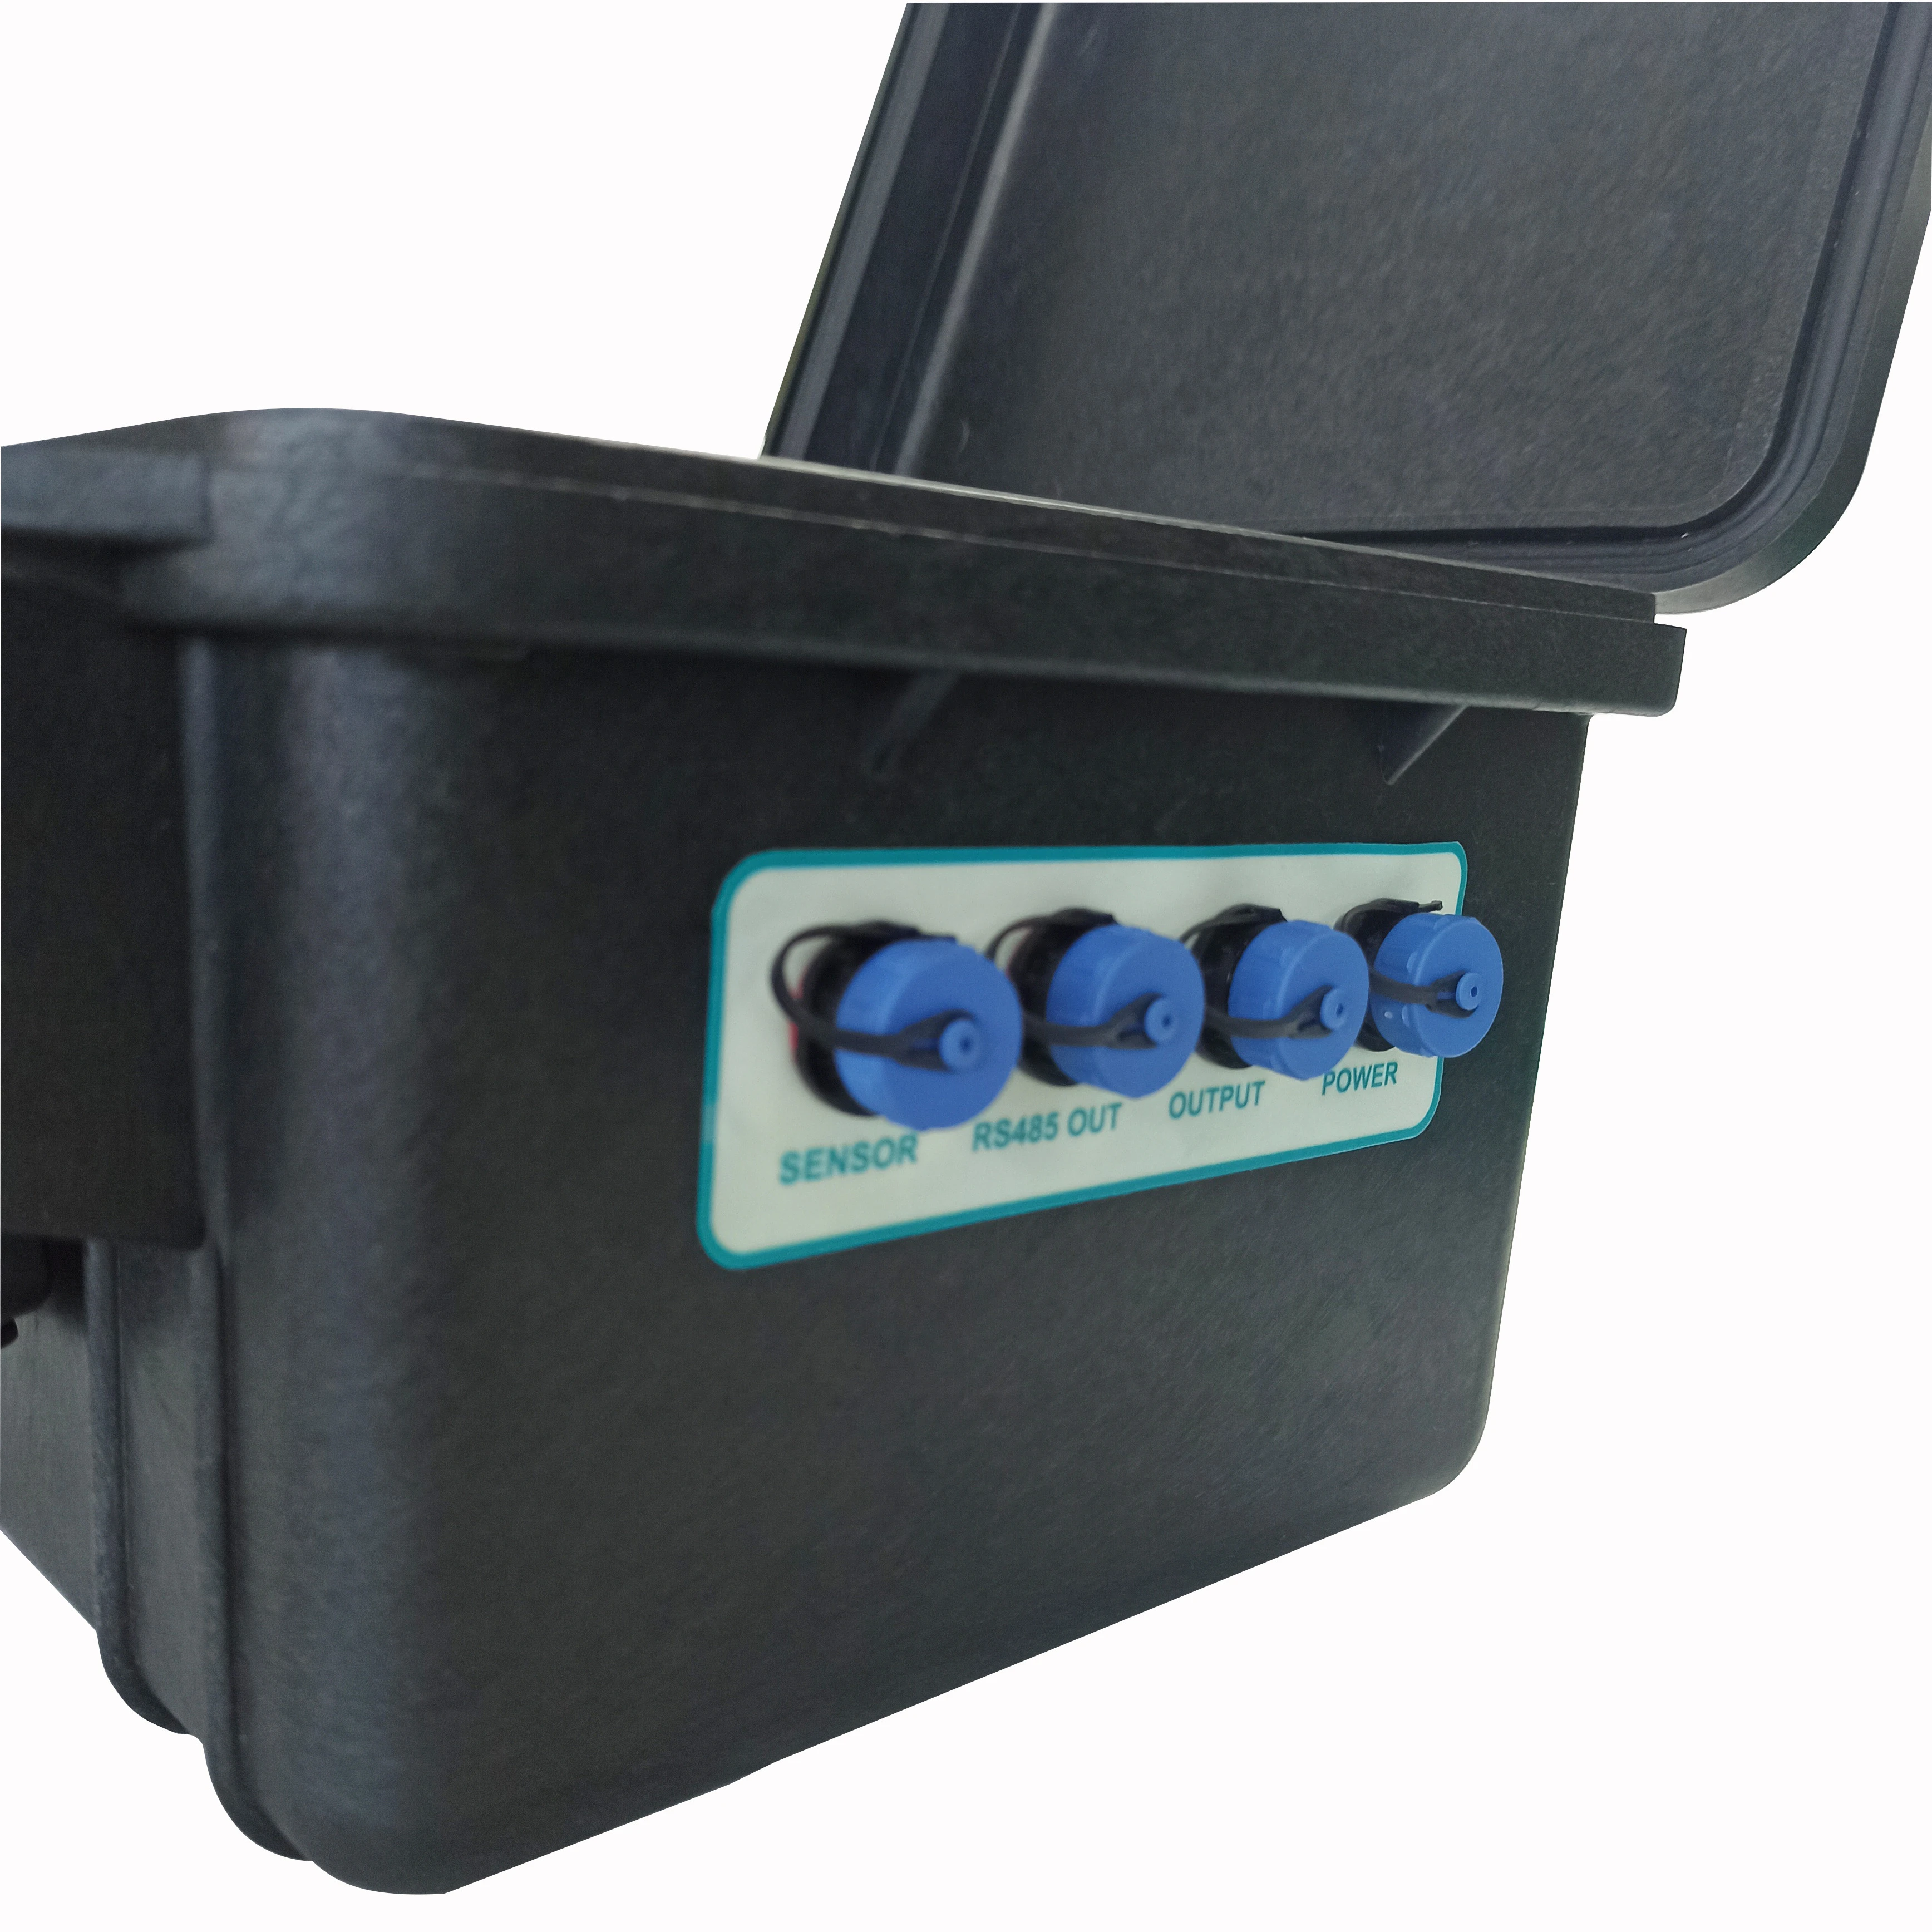 Portable clamp-on ultrasonic flow meter open channel flowmeter